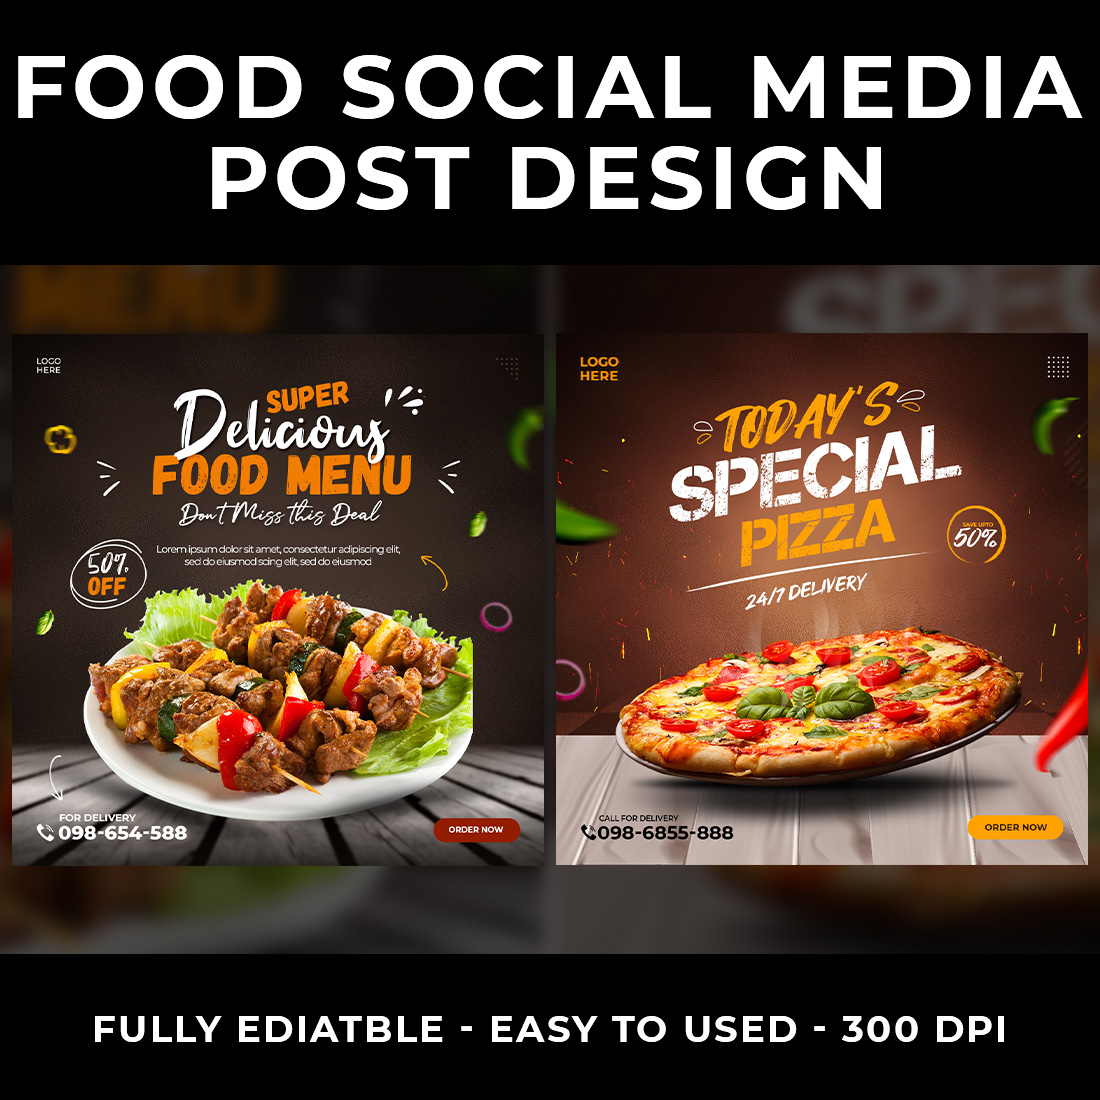 Social Media Food Post Design Template cover image.